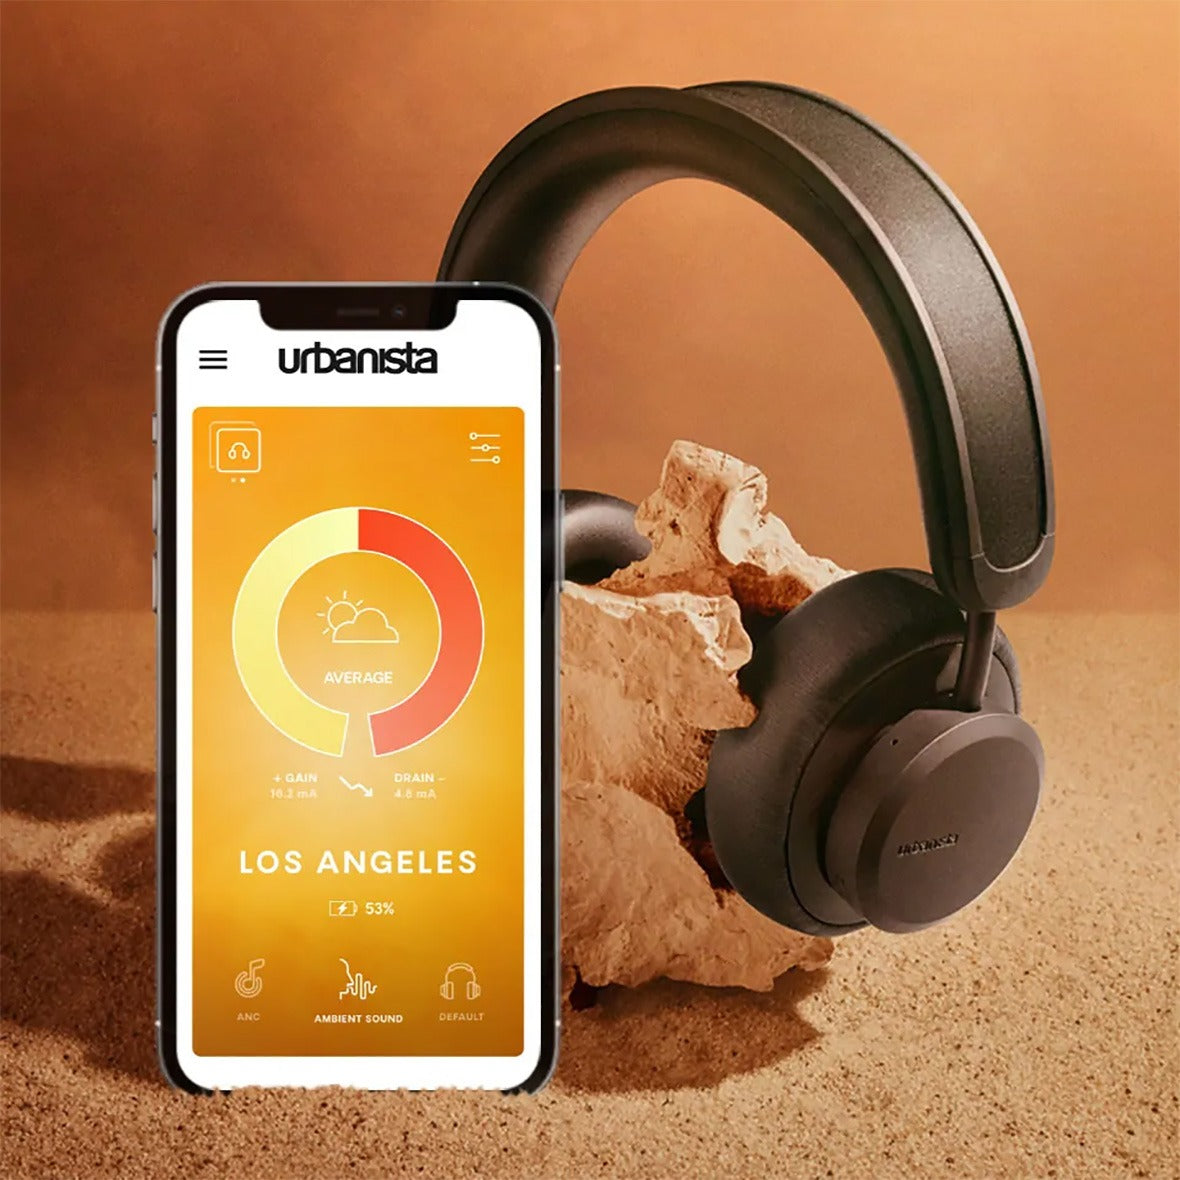 Urbanista Los Angeles Solar Powered Noise Canceling Headphones - Sand Gold (Certified Refurbished)